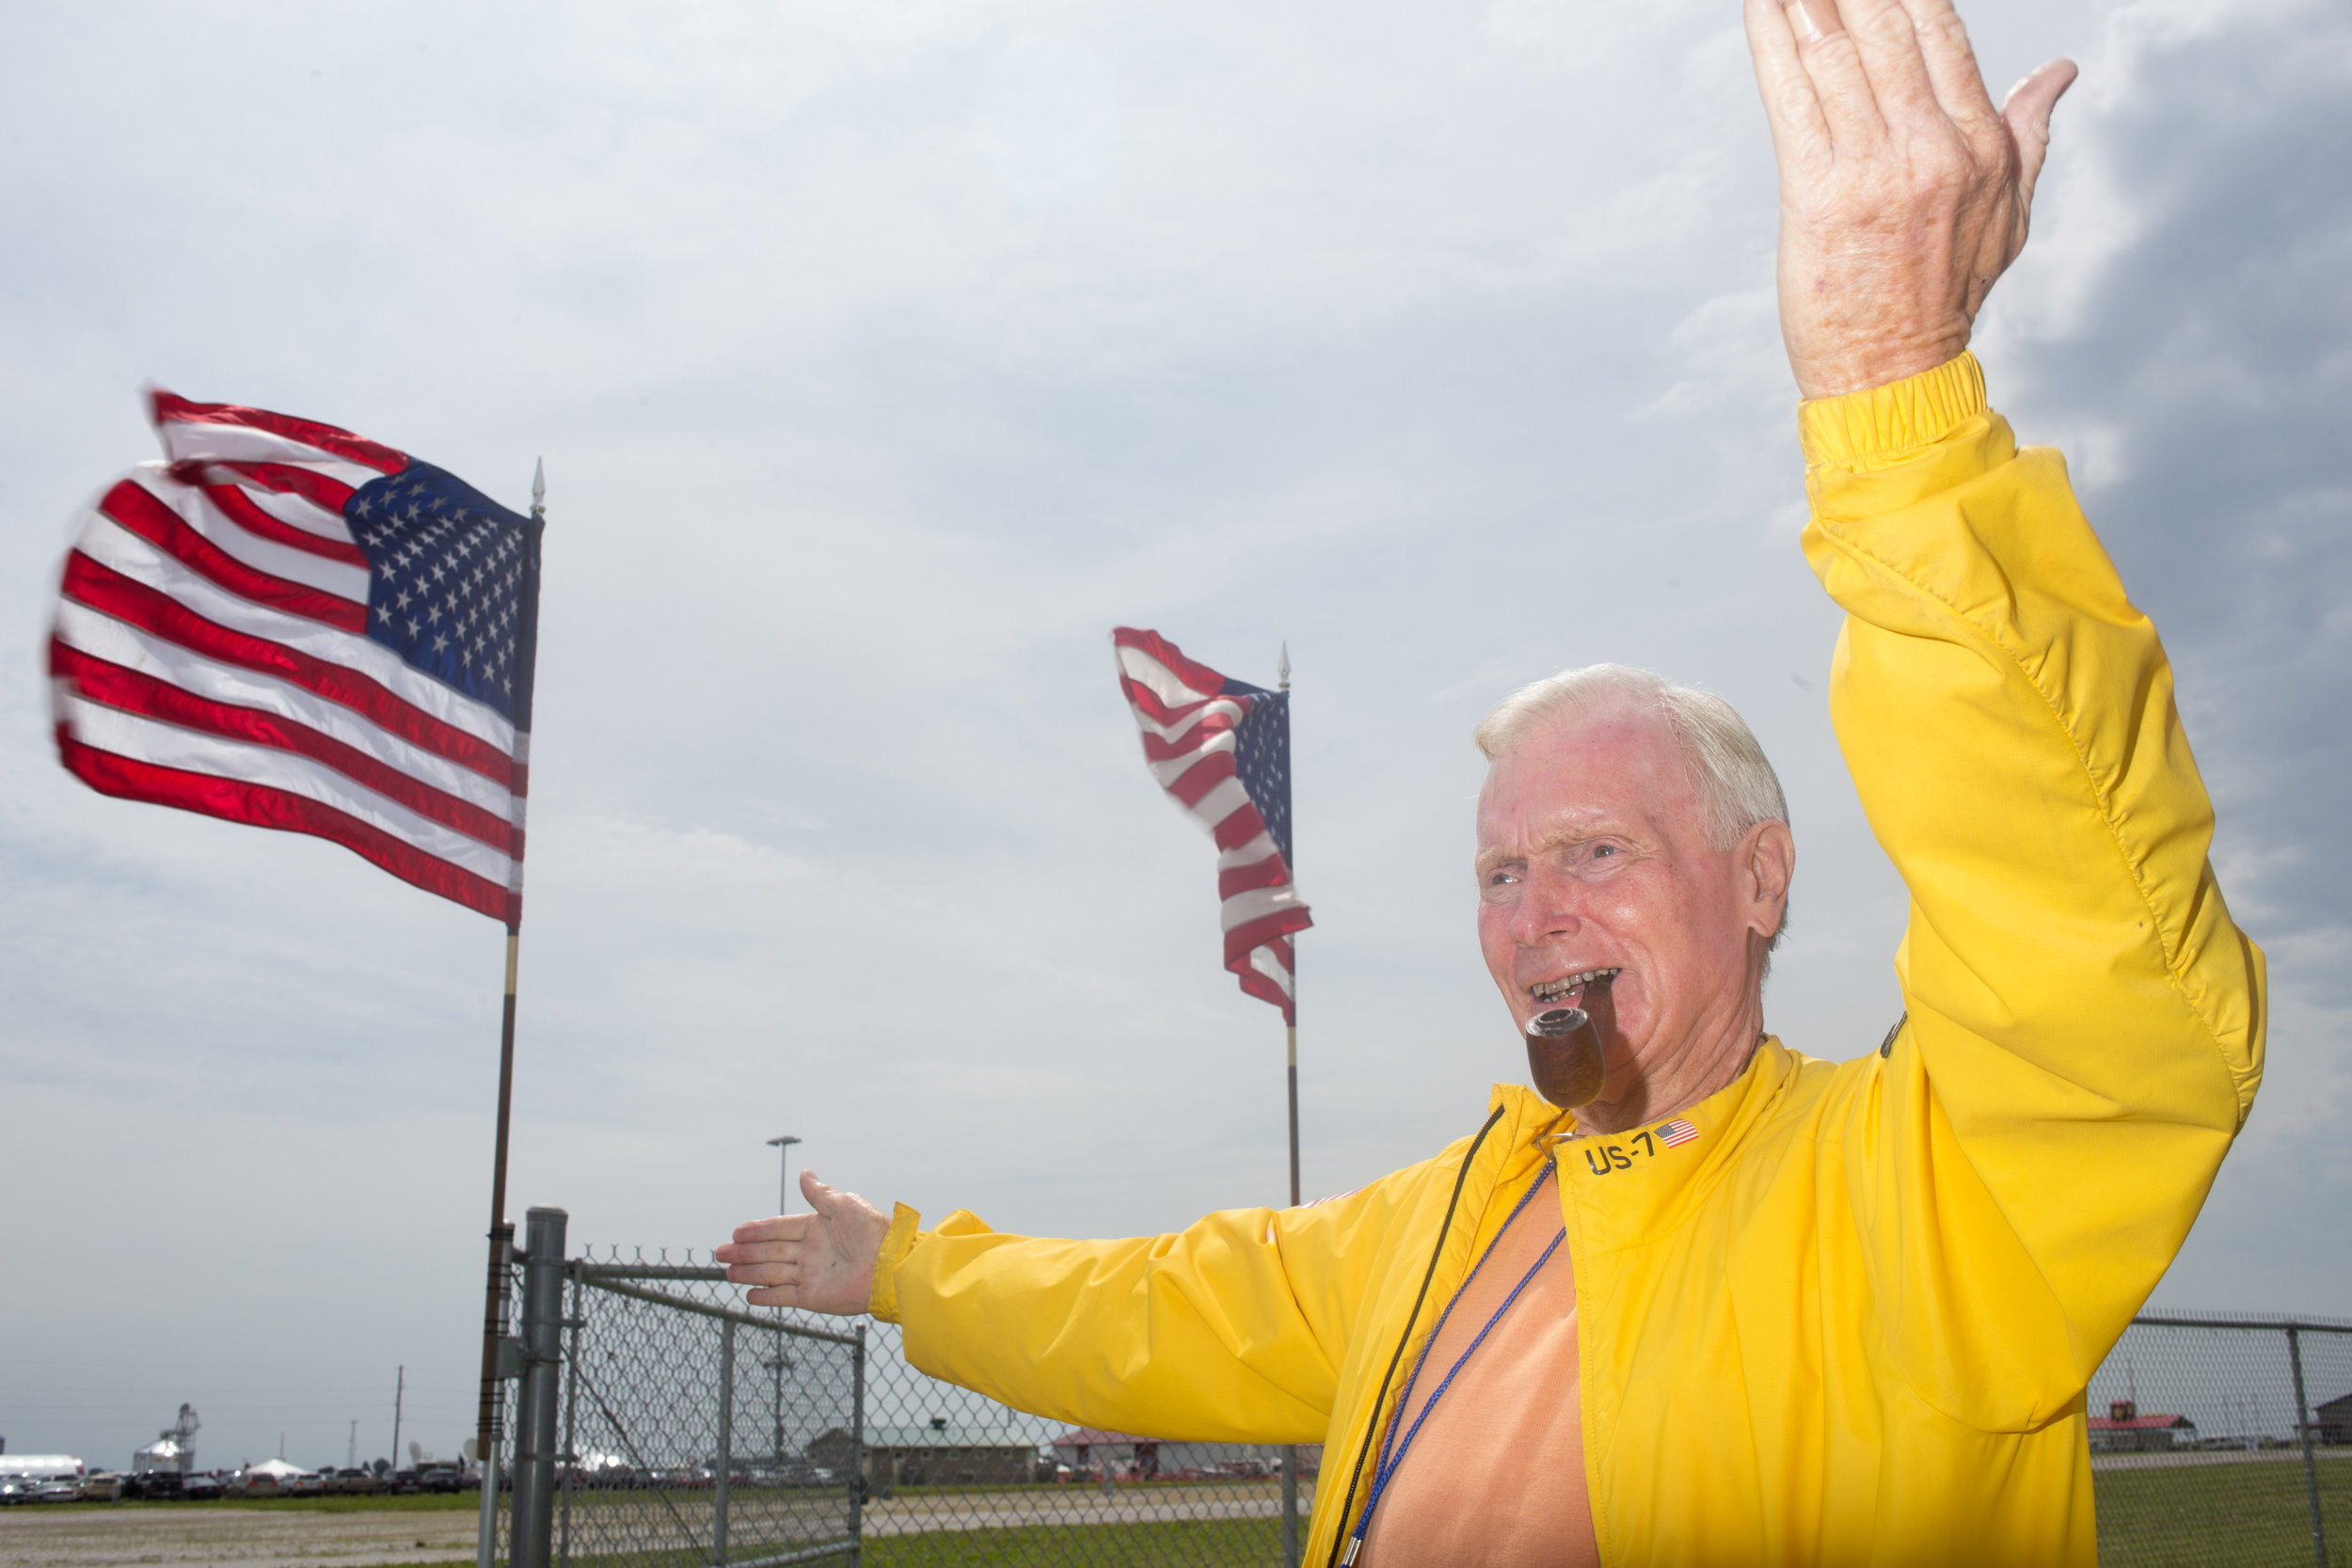  A man directs traffic at Senator Joni Ernst's First Annual Roast &amp; Ride on June 6, 2015 in Boone, Iowa.  